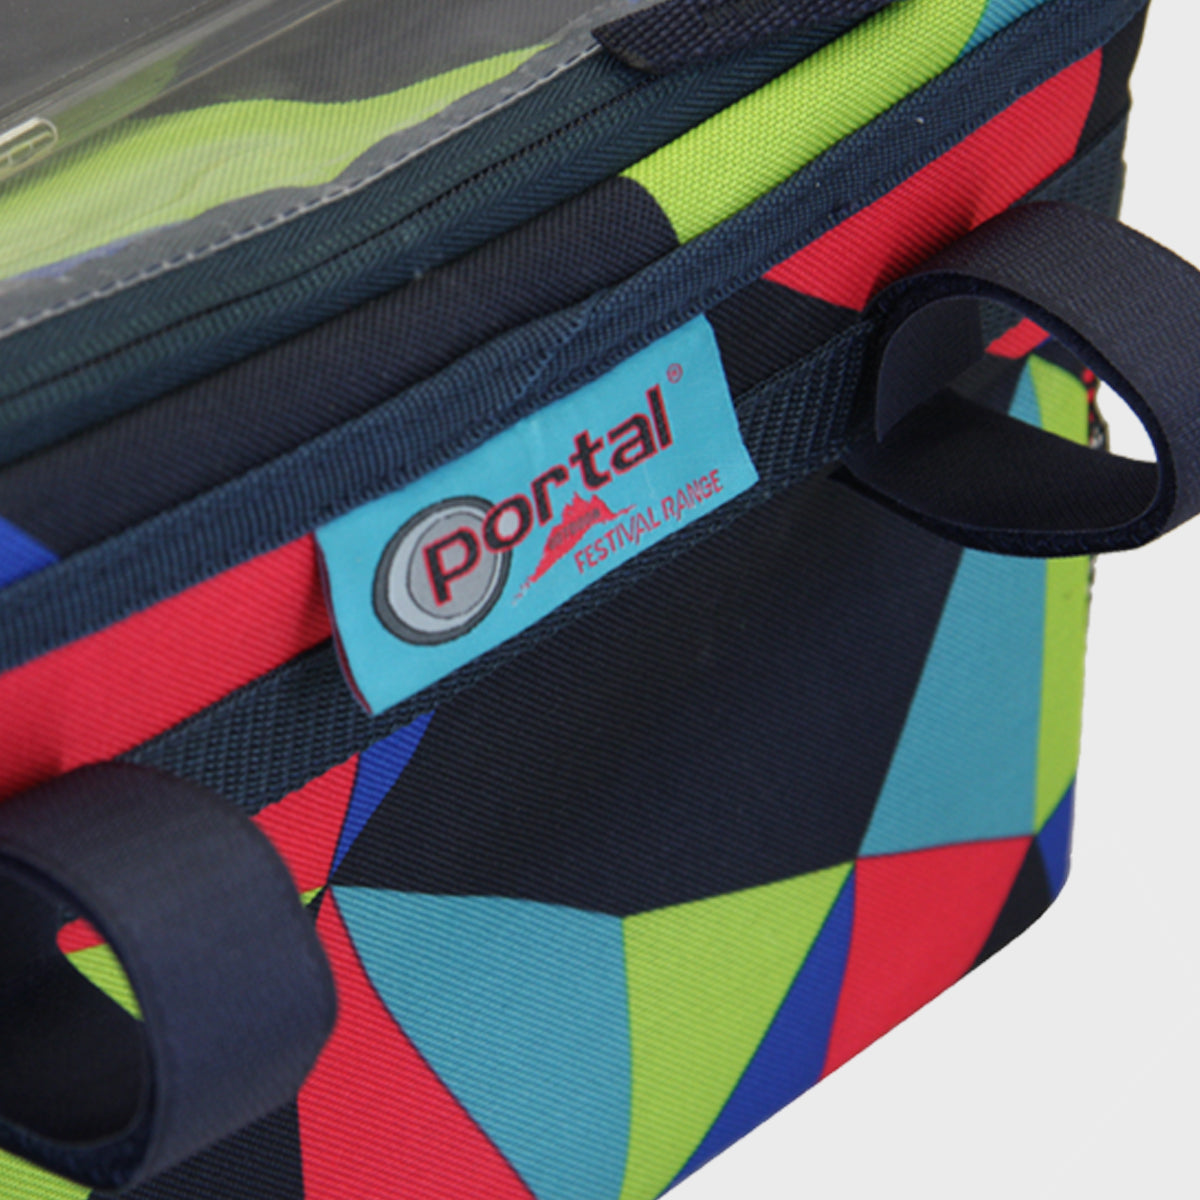 Aspen Electro 12 Litre Cool Bag - Portal Outdoor UK